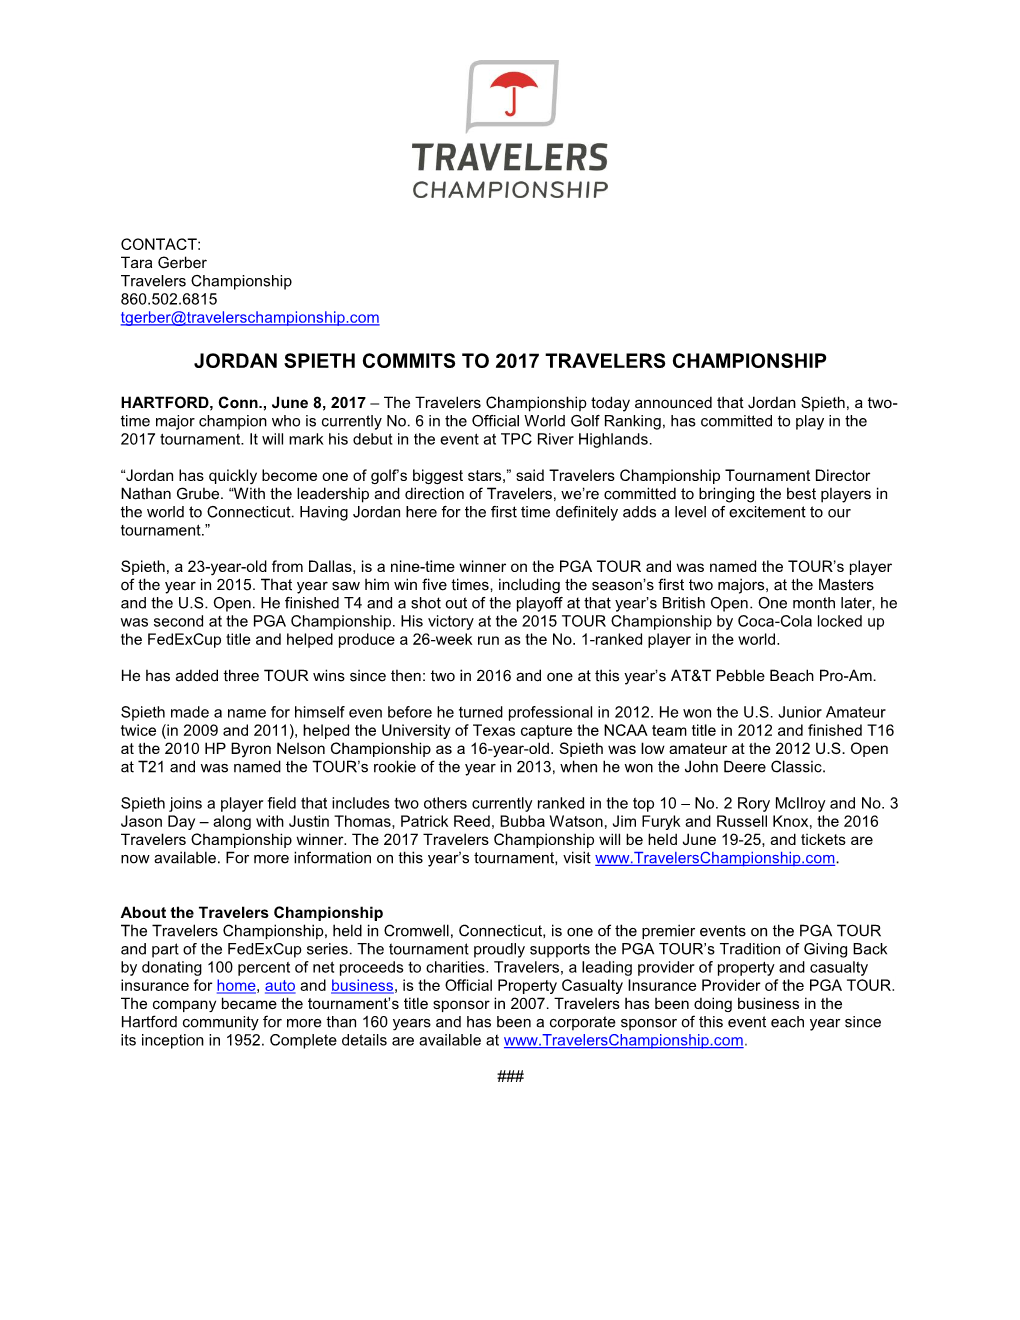 Jordan Spieth Commits to 2017 Travelers Championship